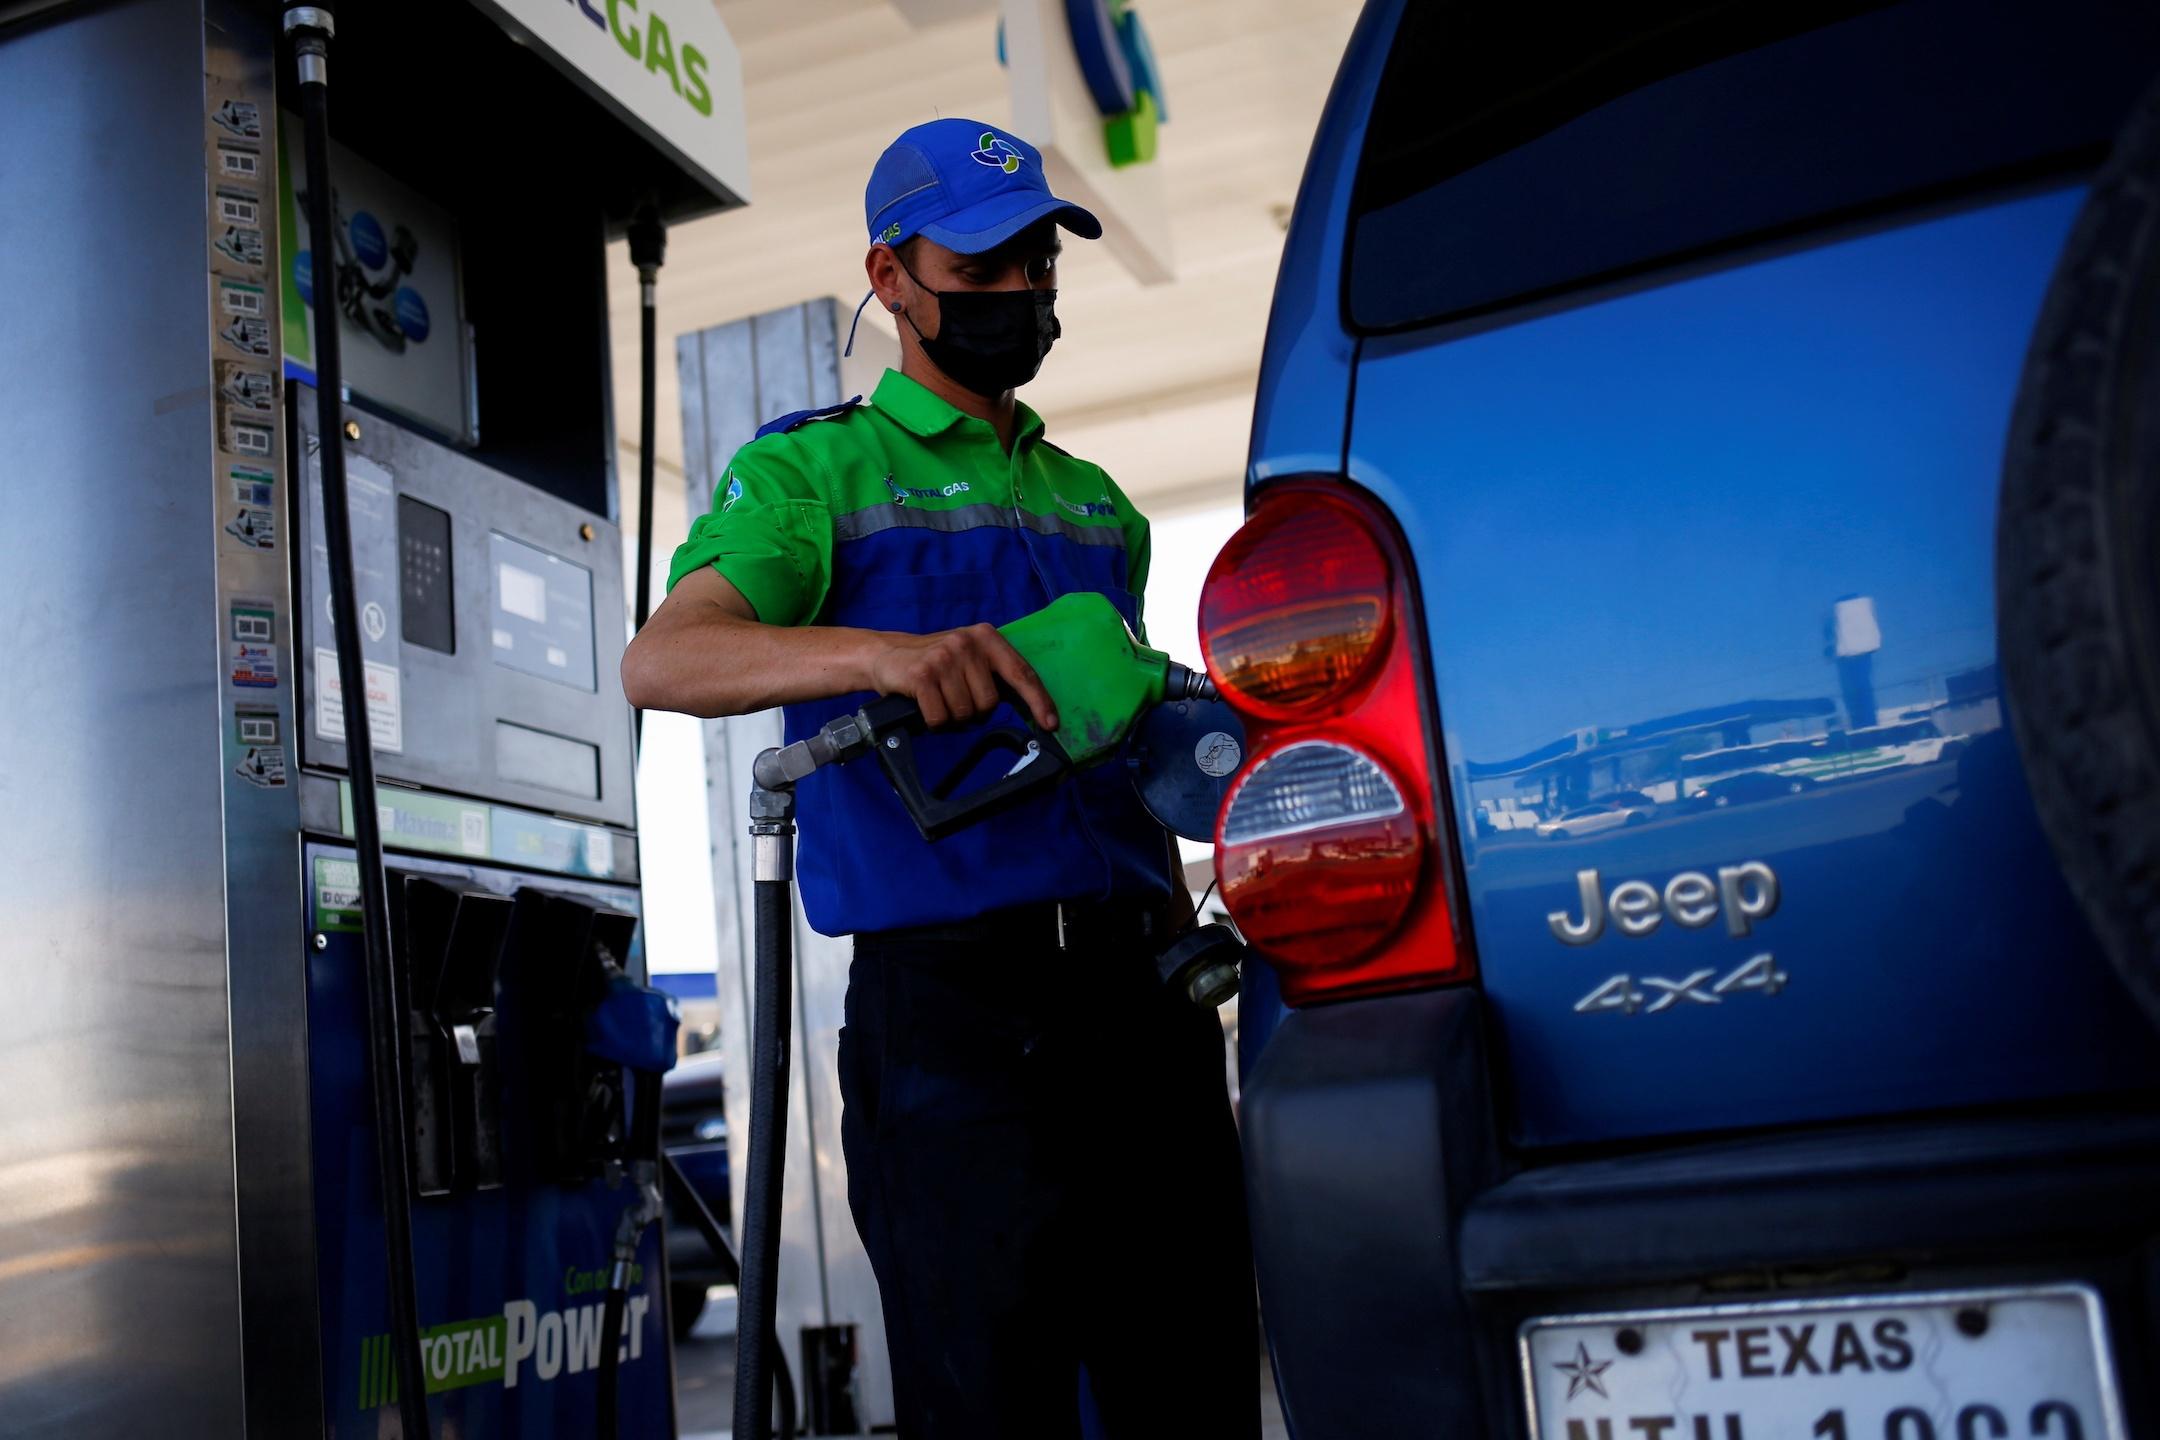 News Wrap: Nation's average gas price drops below $4